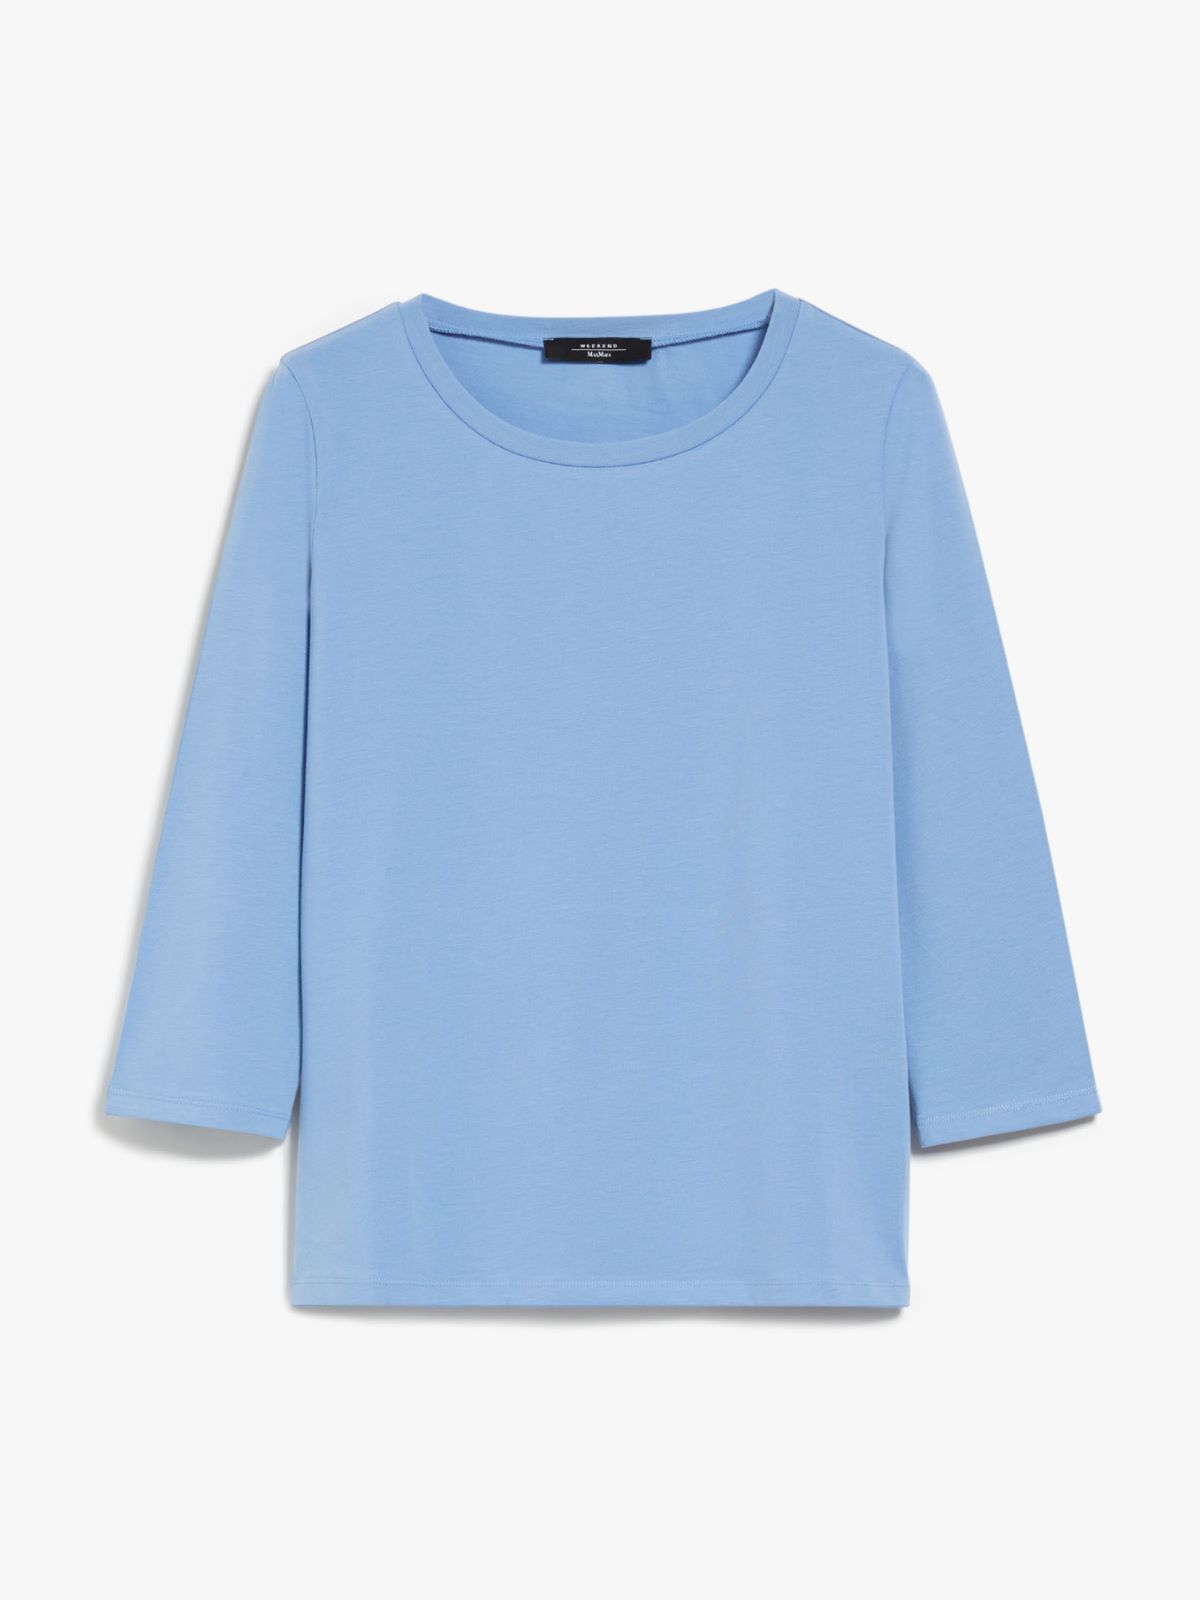 Organic cotton T-shirt, sky blue | Weekend Max Mara